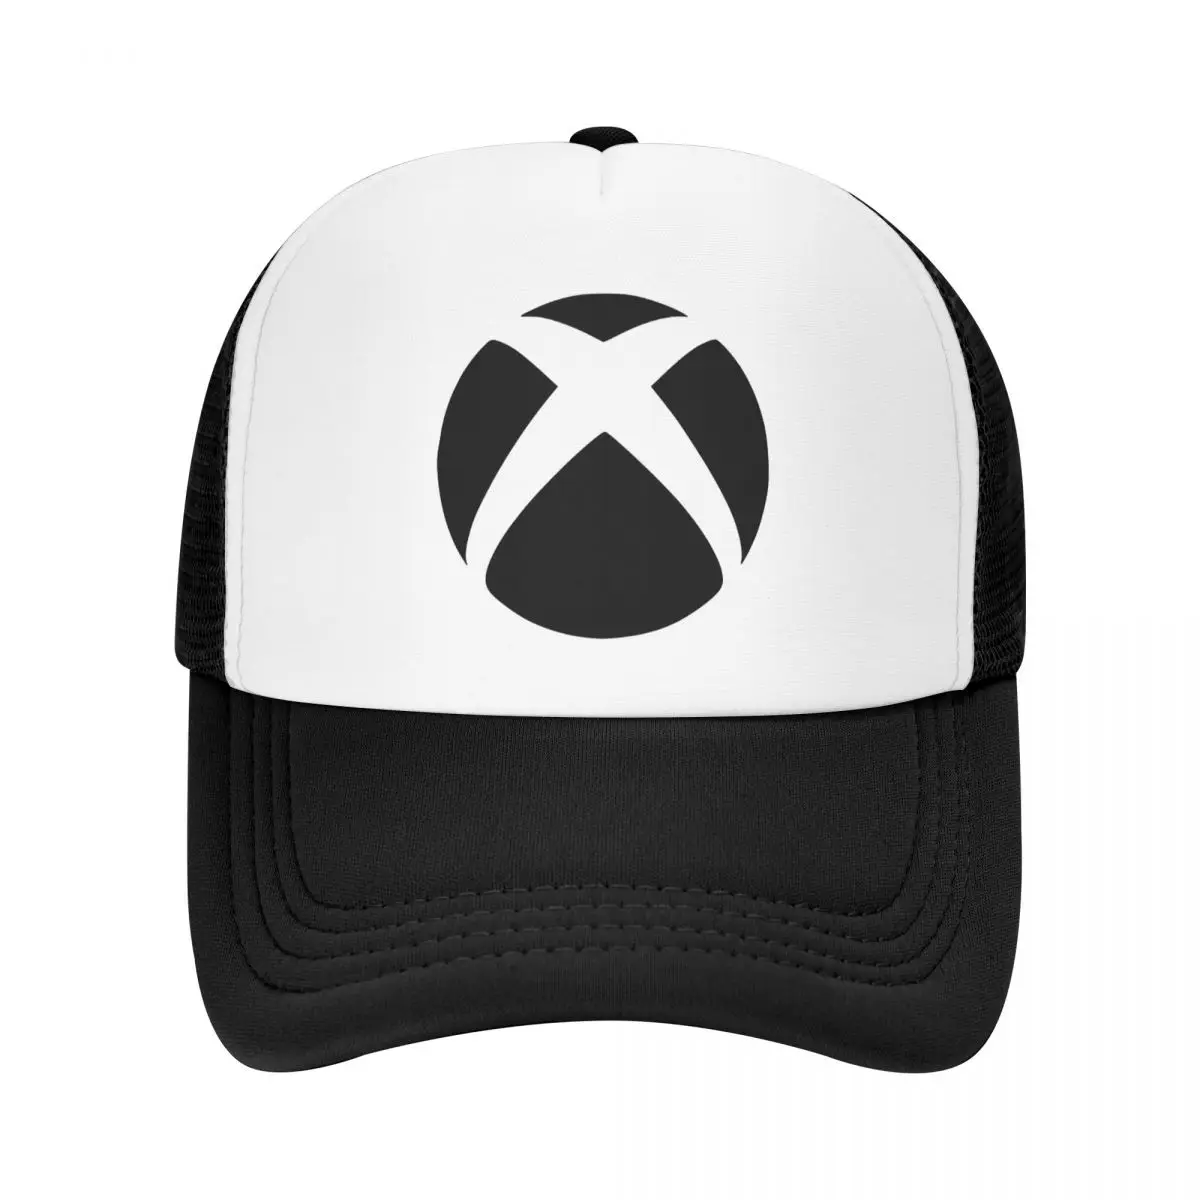 Punk Unisex Classic Xboxs Trucker Hat Adult Game Gamer Gifts Adjustable Baseball Cap Women Men Sun Protection Snapback Caps